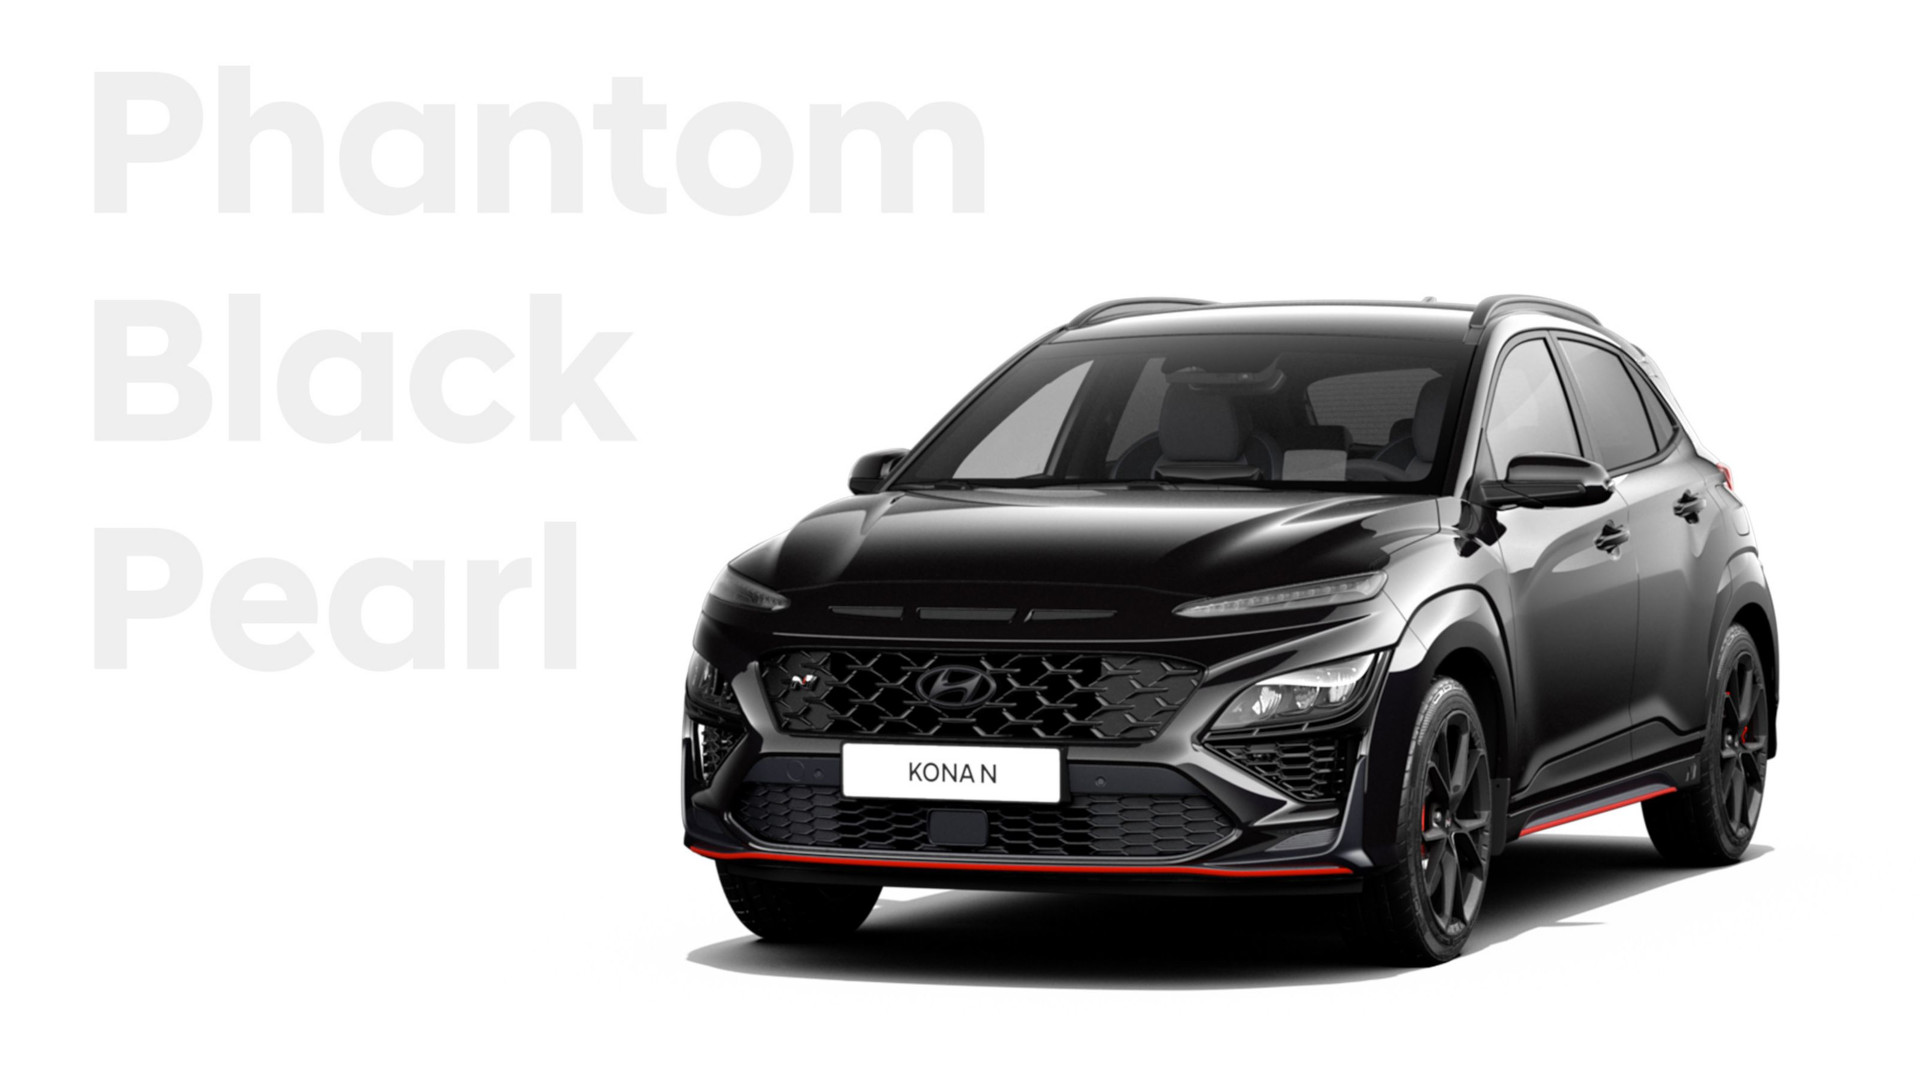 Hyundai KONA N performance SUV in Phantom Black Pearl.